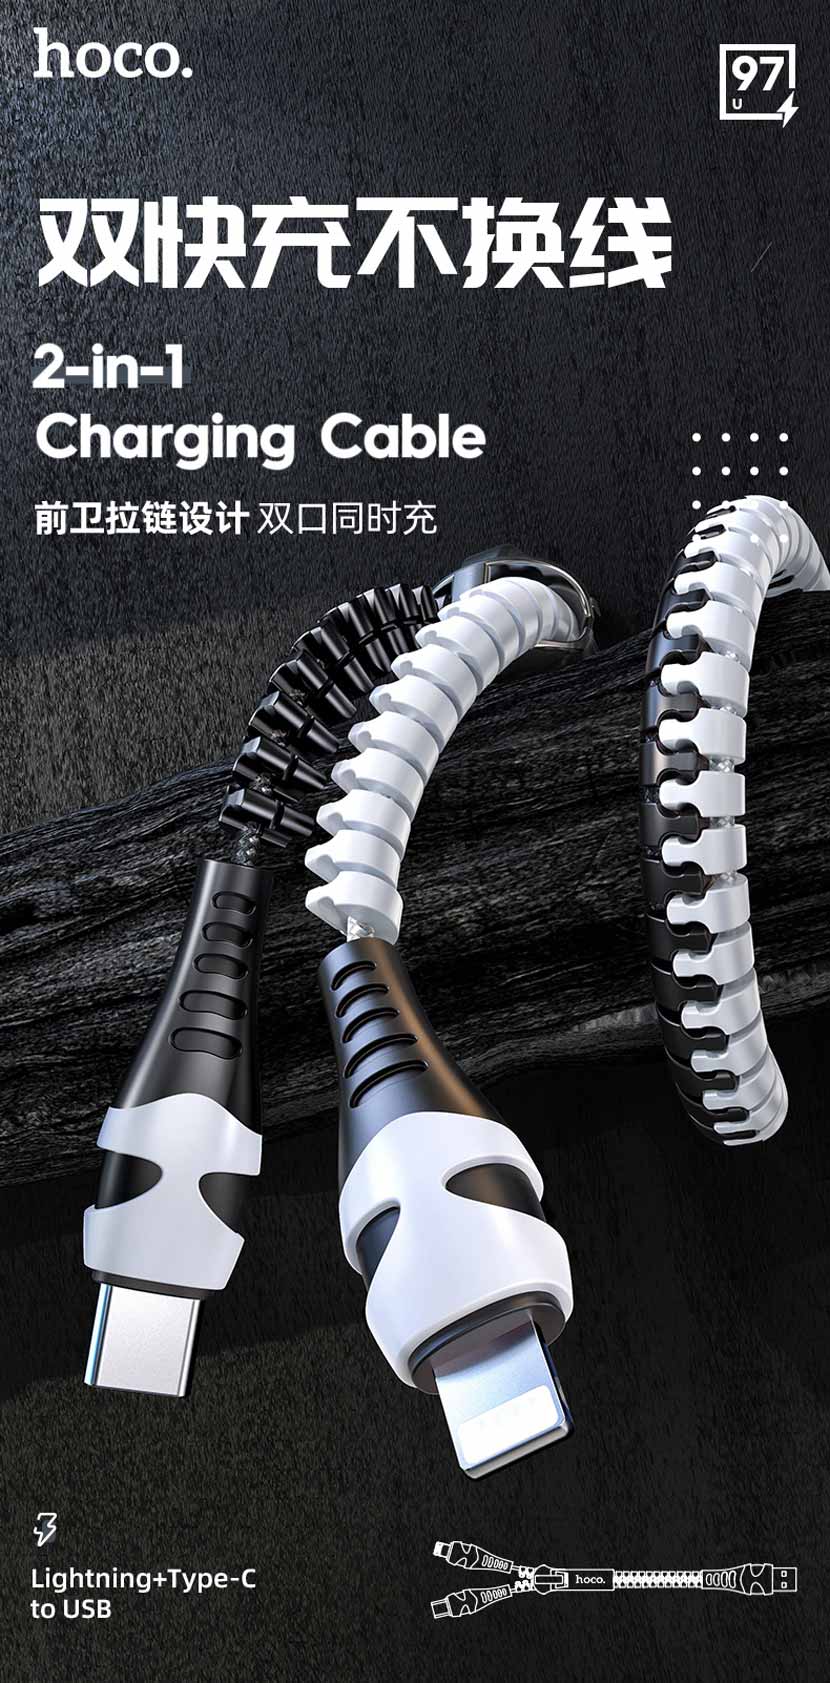 hoco news u97 2in1 zipper charging cable lightning type c cn